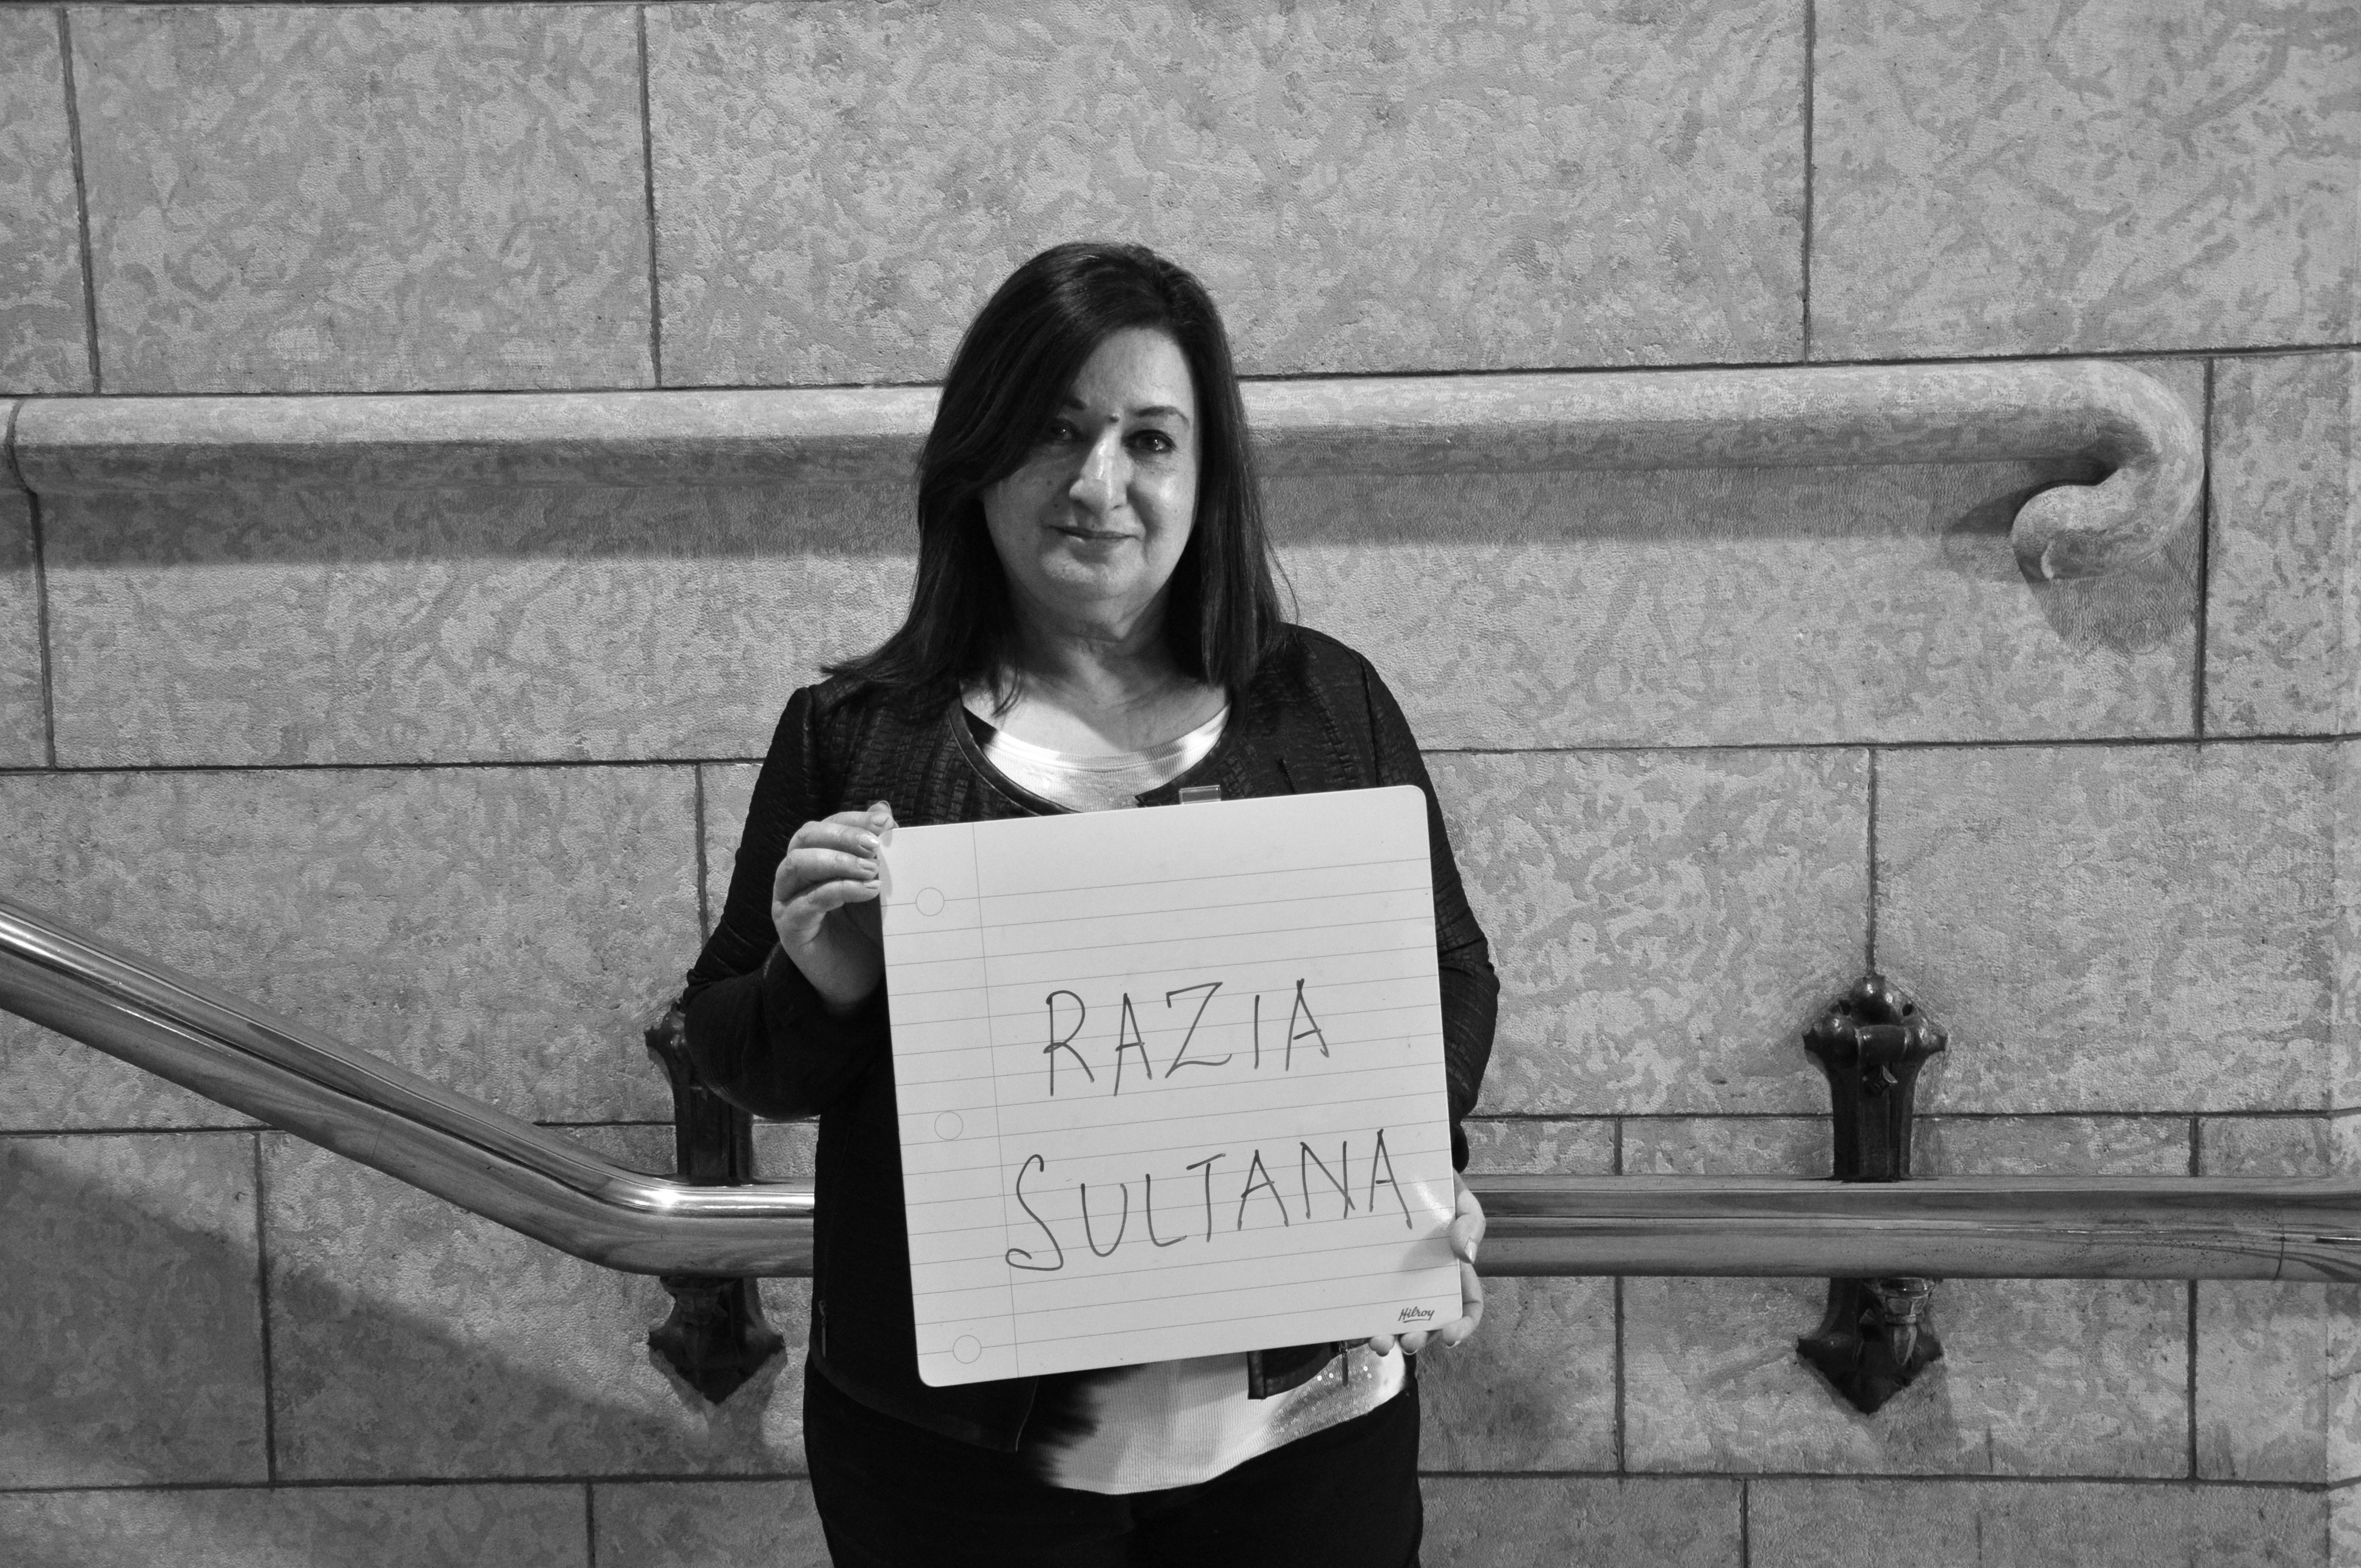 Senator Salma Ataullahjan is inspired by Razia Sultana.